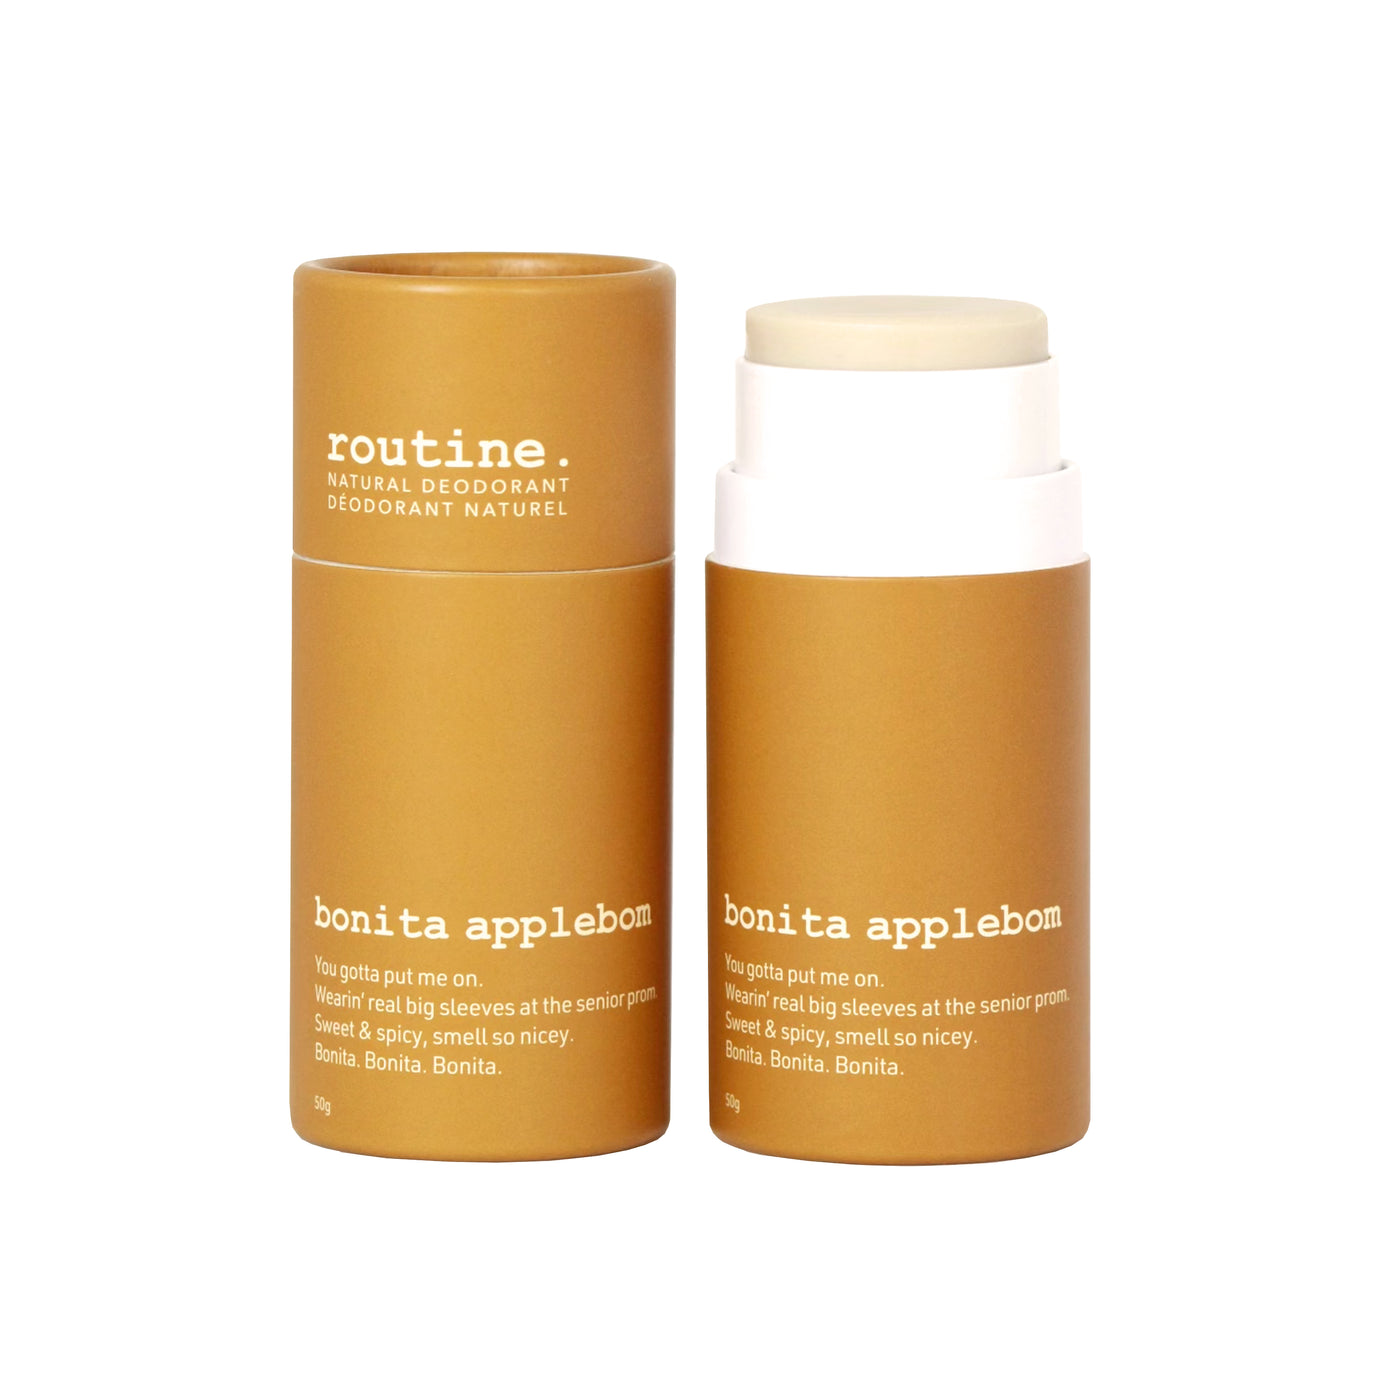 Routine Bonita Applebom Stick Deodorant 50g